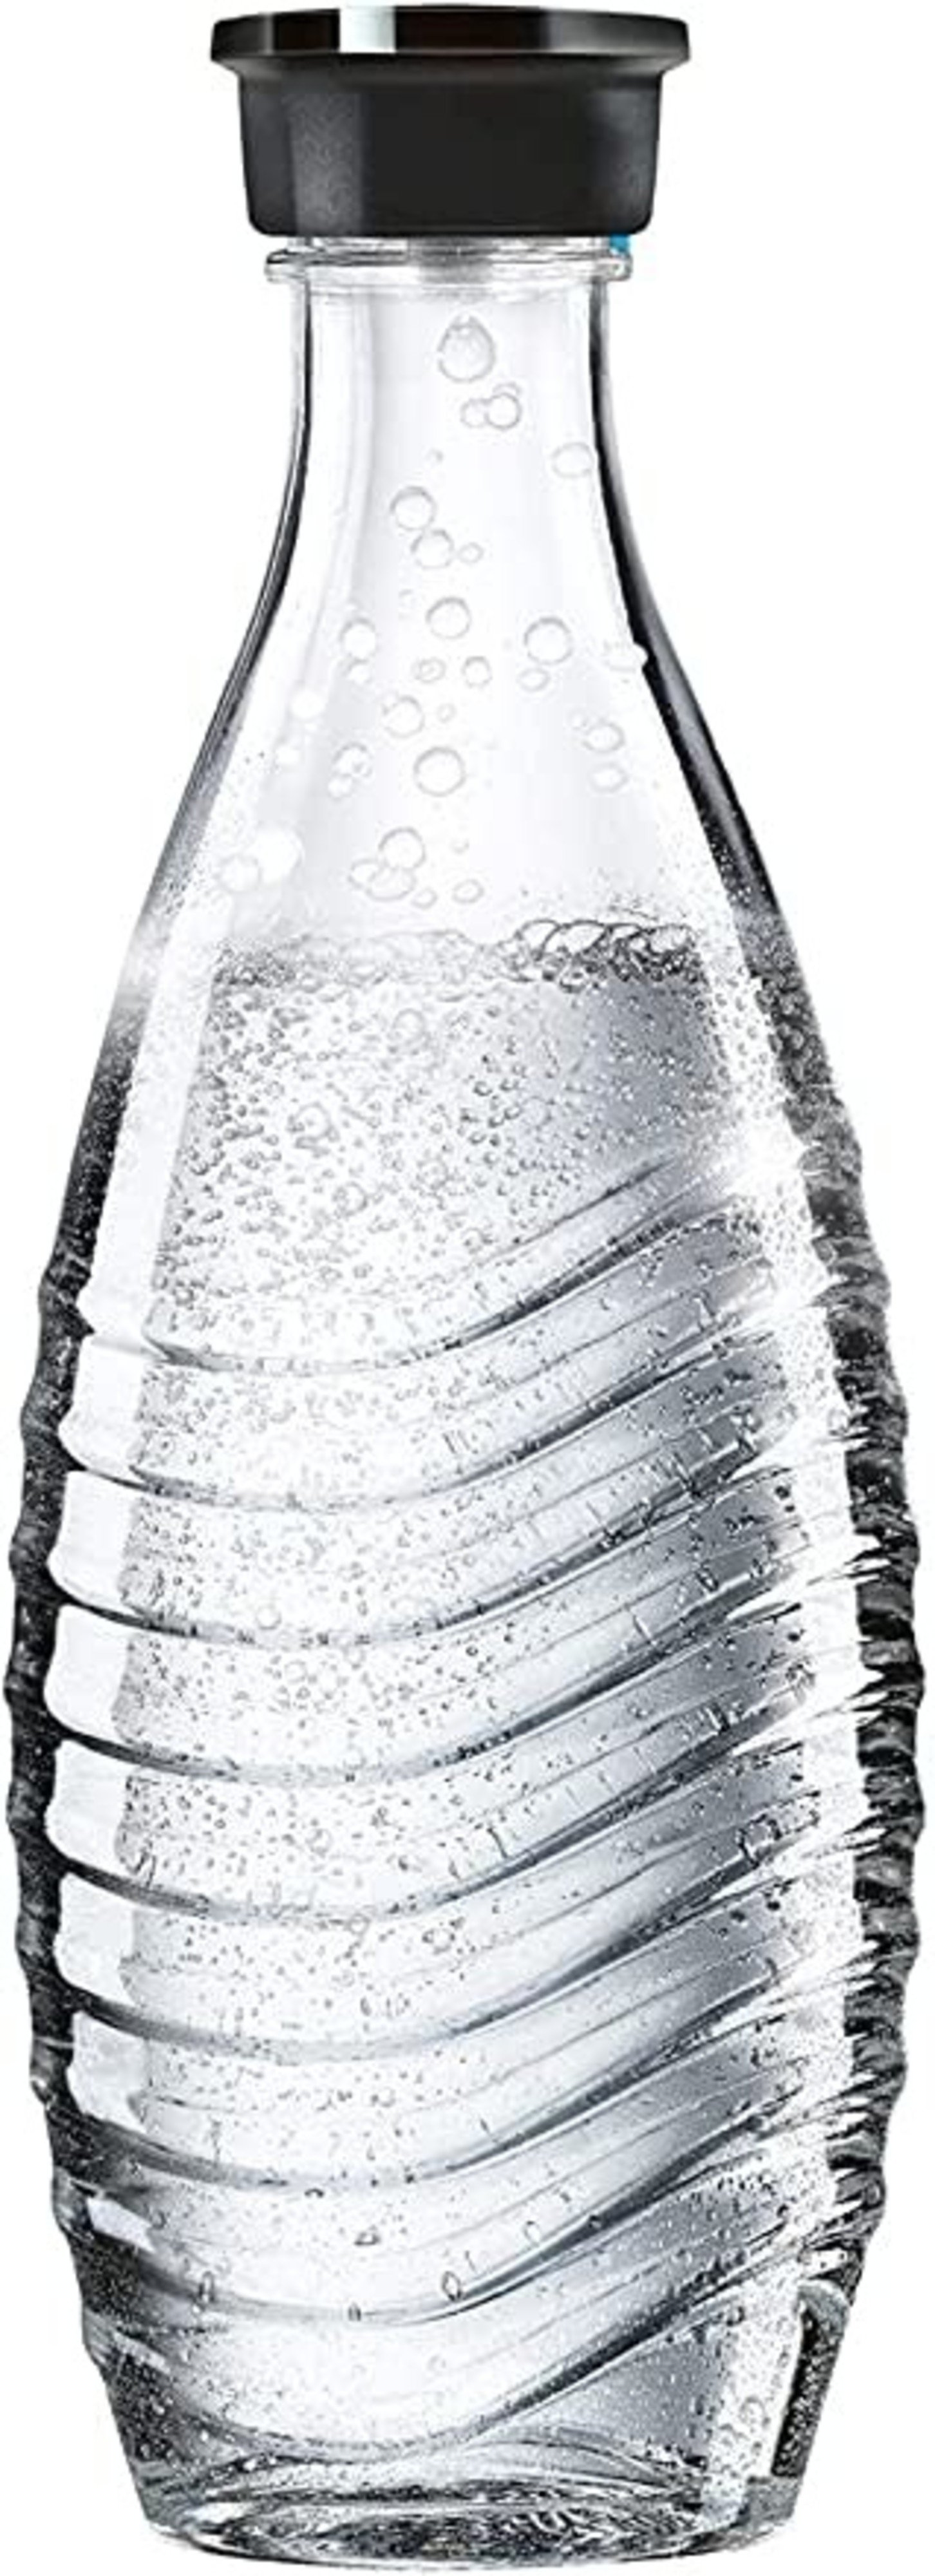 Sodastream Carbonating Glass Carafe - The Boston Shaker